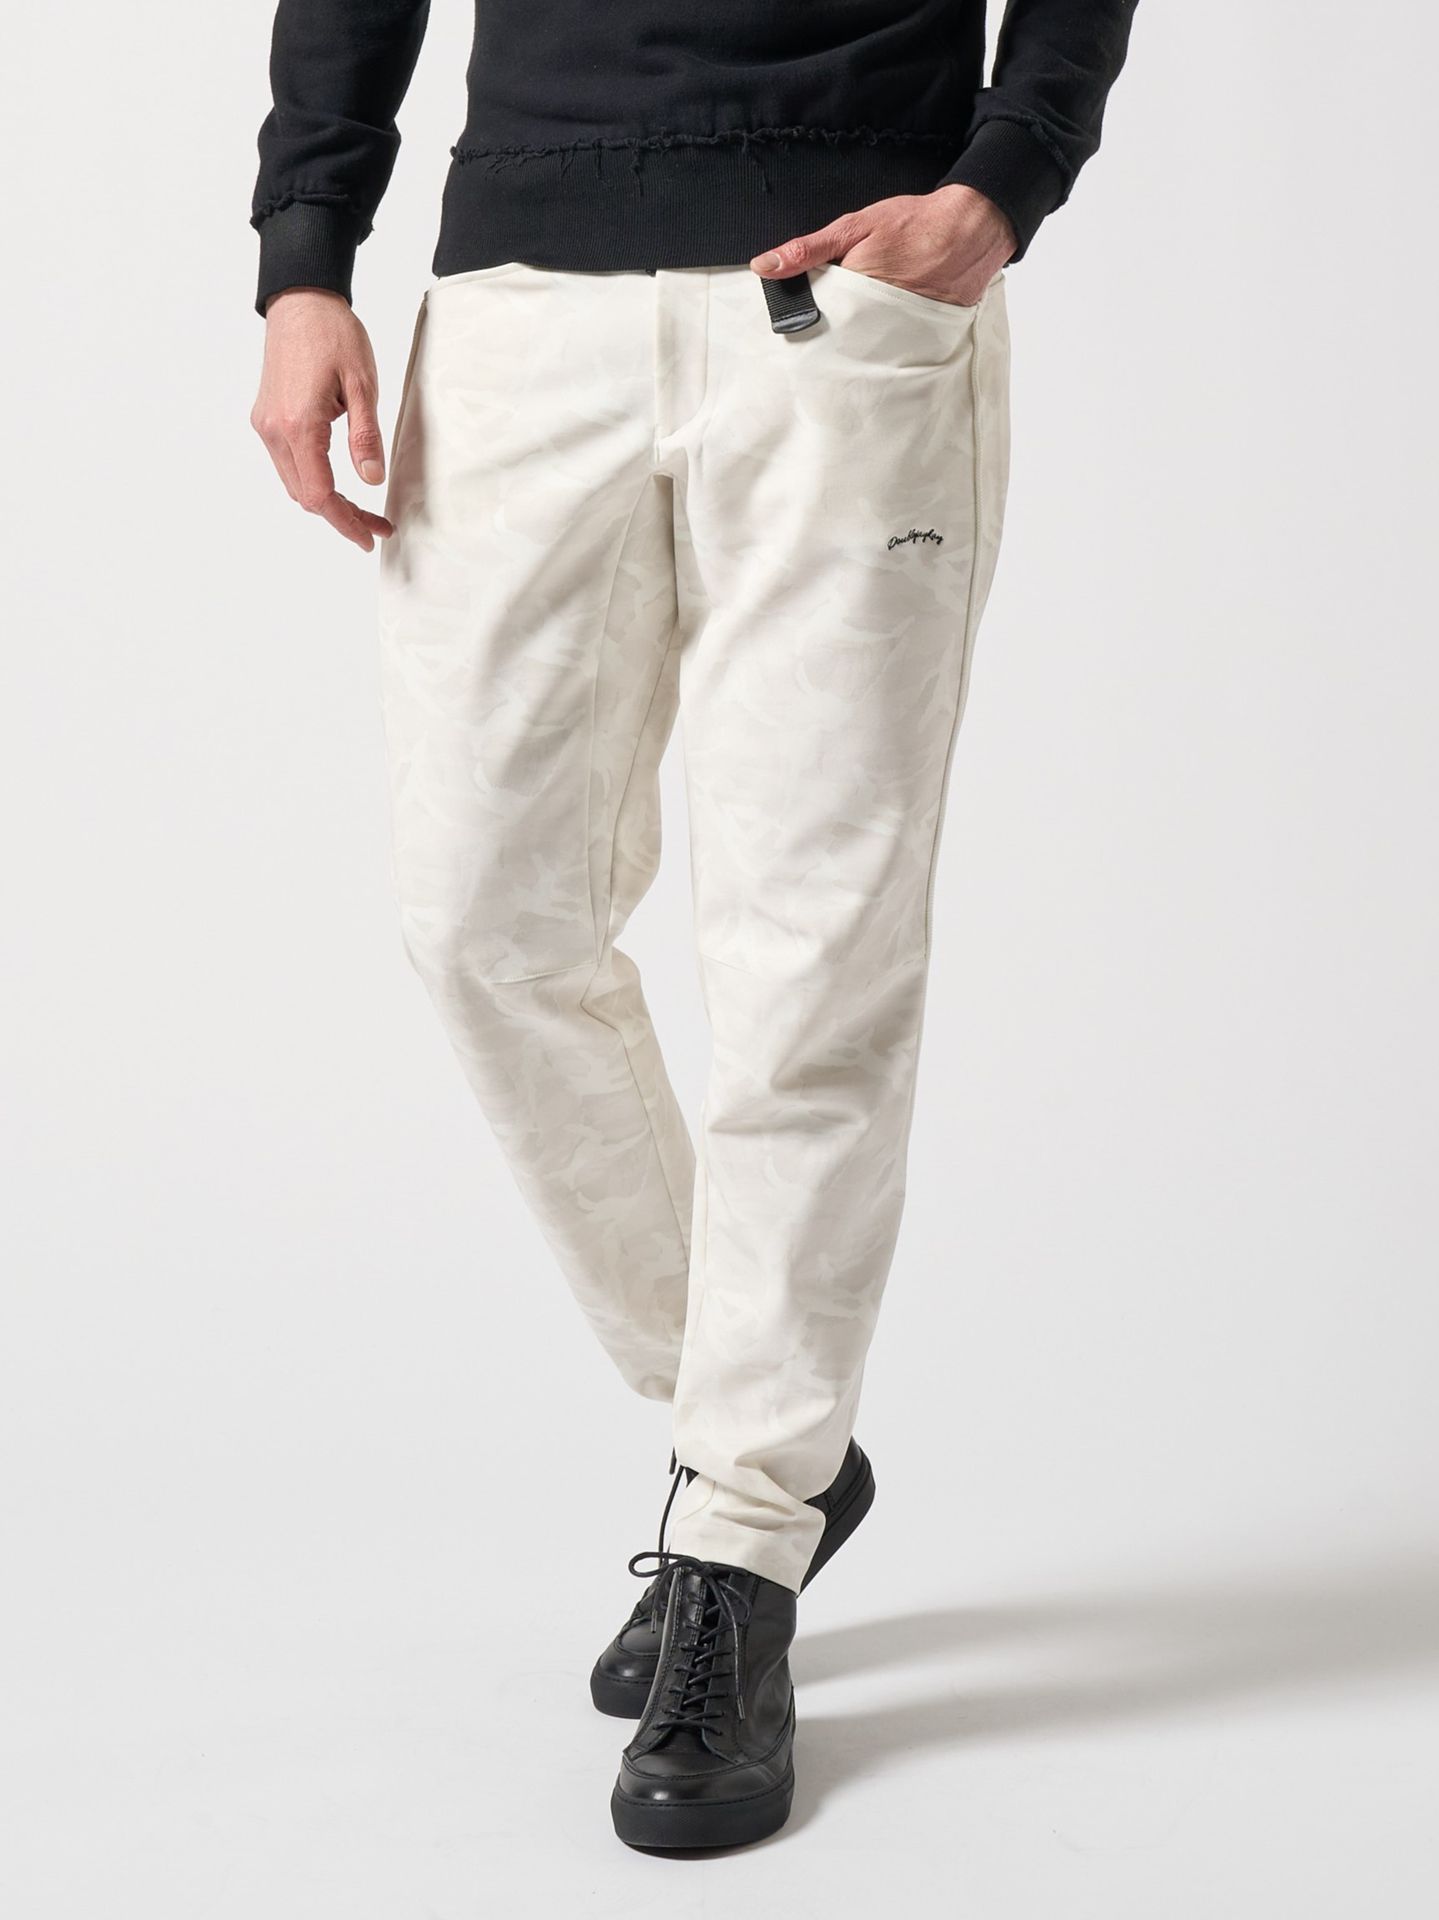 SALE限定セール【 2022新品 】wjk パンツ スラックス smart pants パンツ